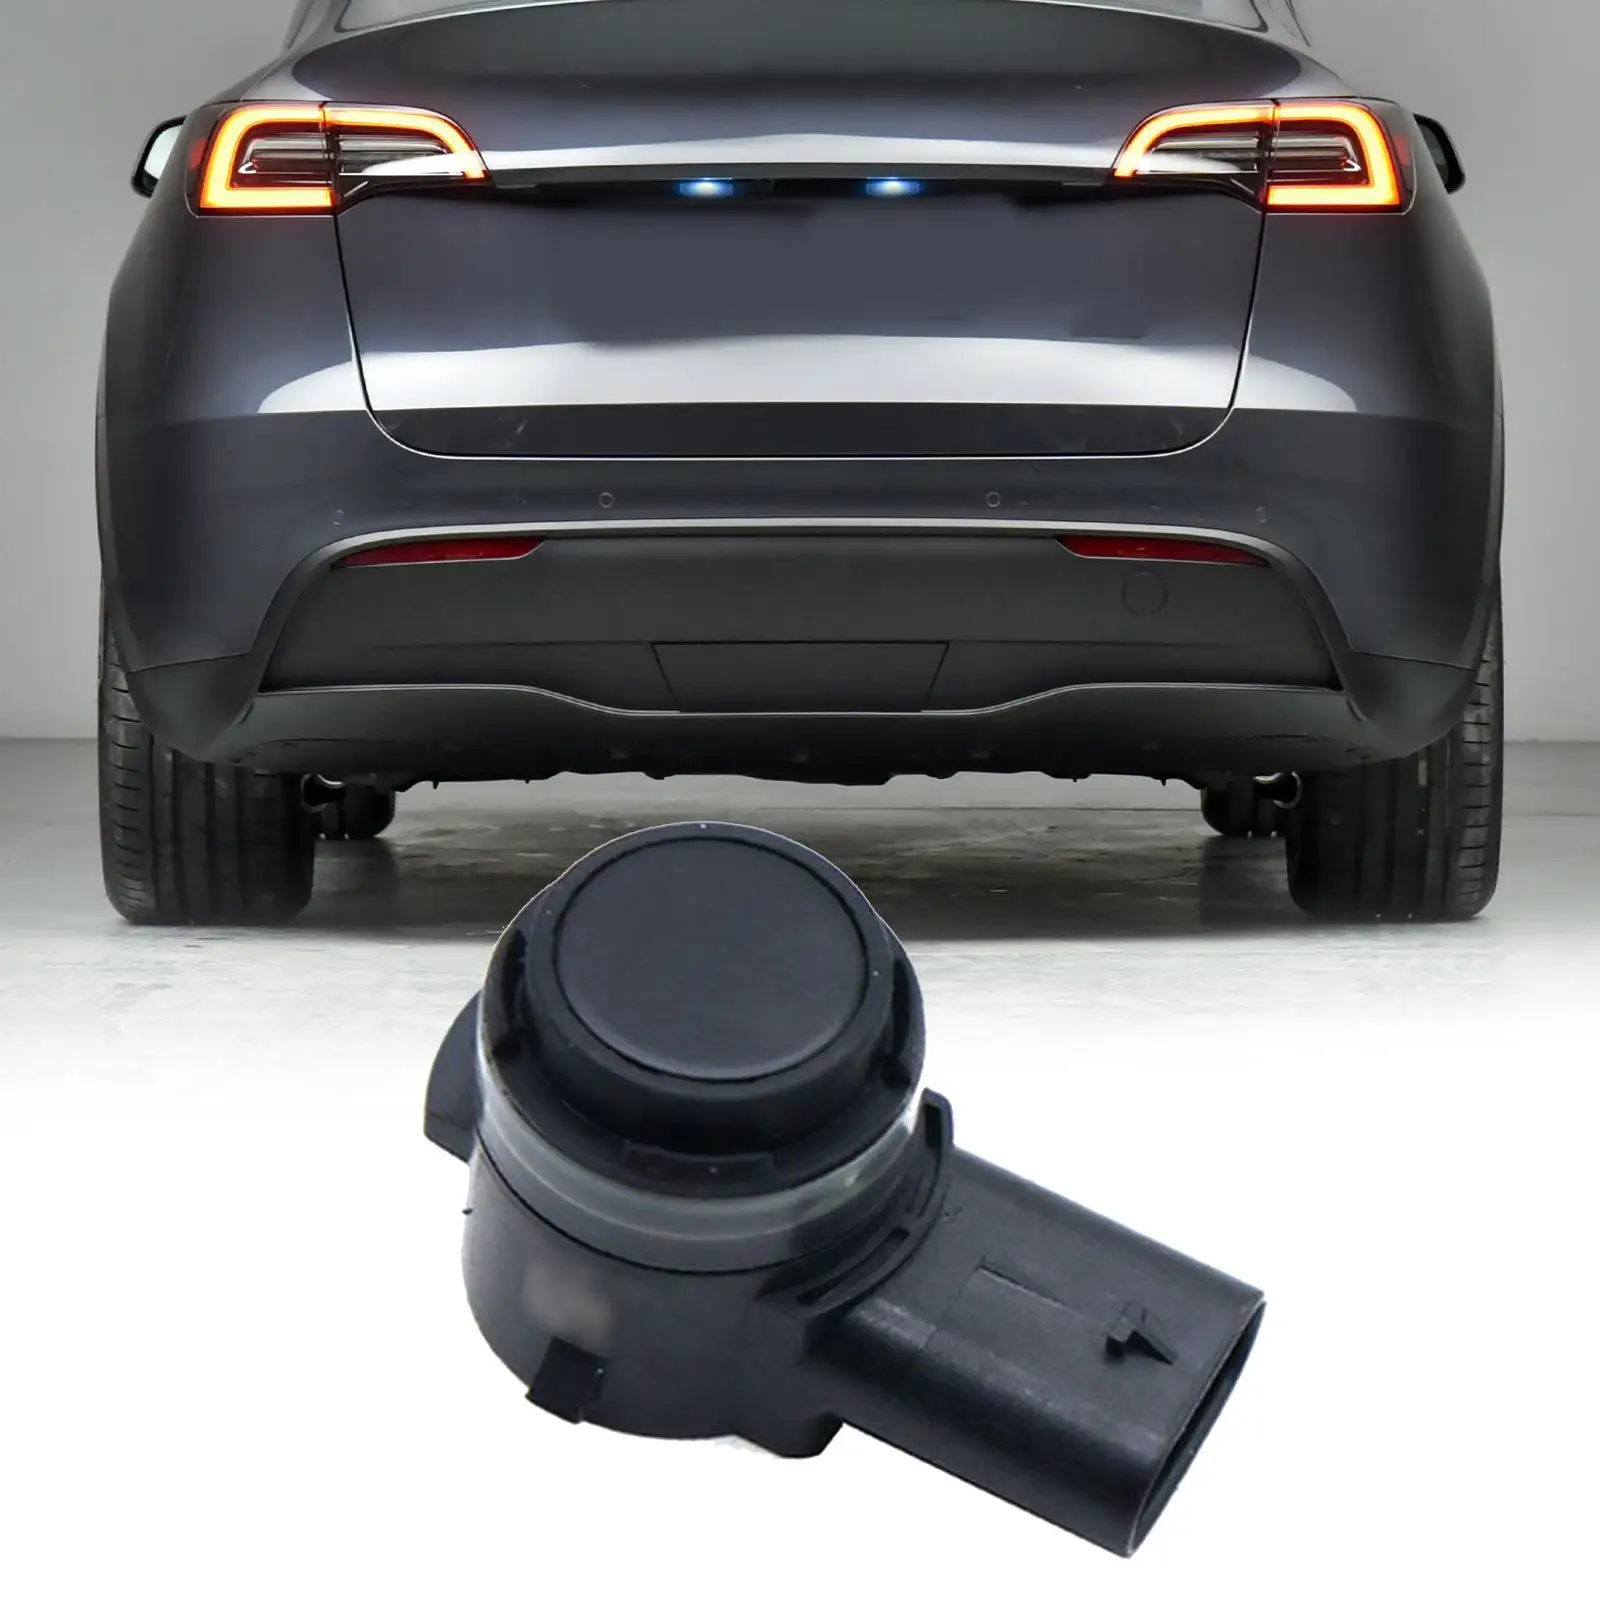 Parking Assist Sensor 1127503-12-b 1127503-12-c Replaces for Tesla Model x S 3 2017-2019 Vehicle Repair Parts Professional